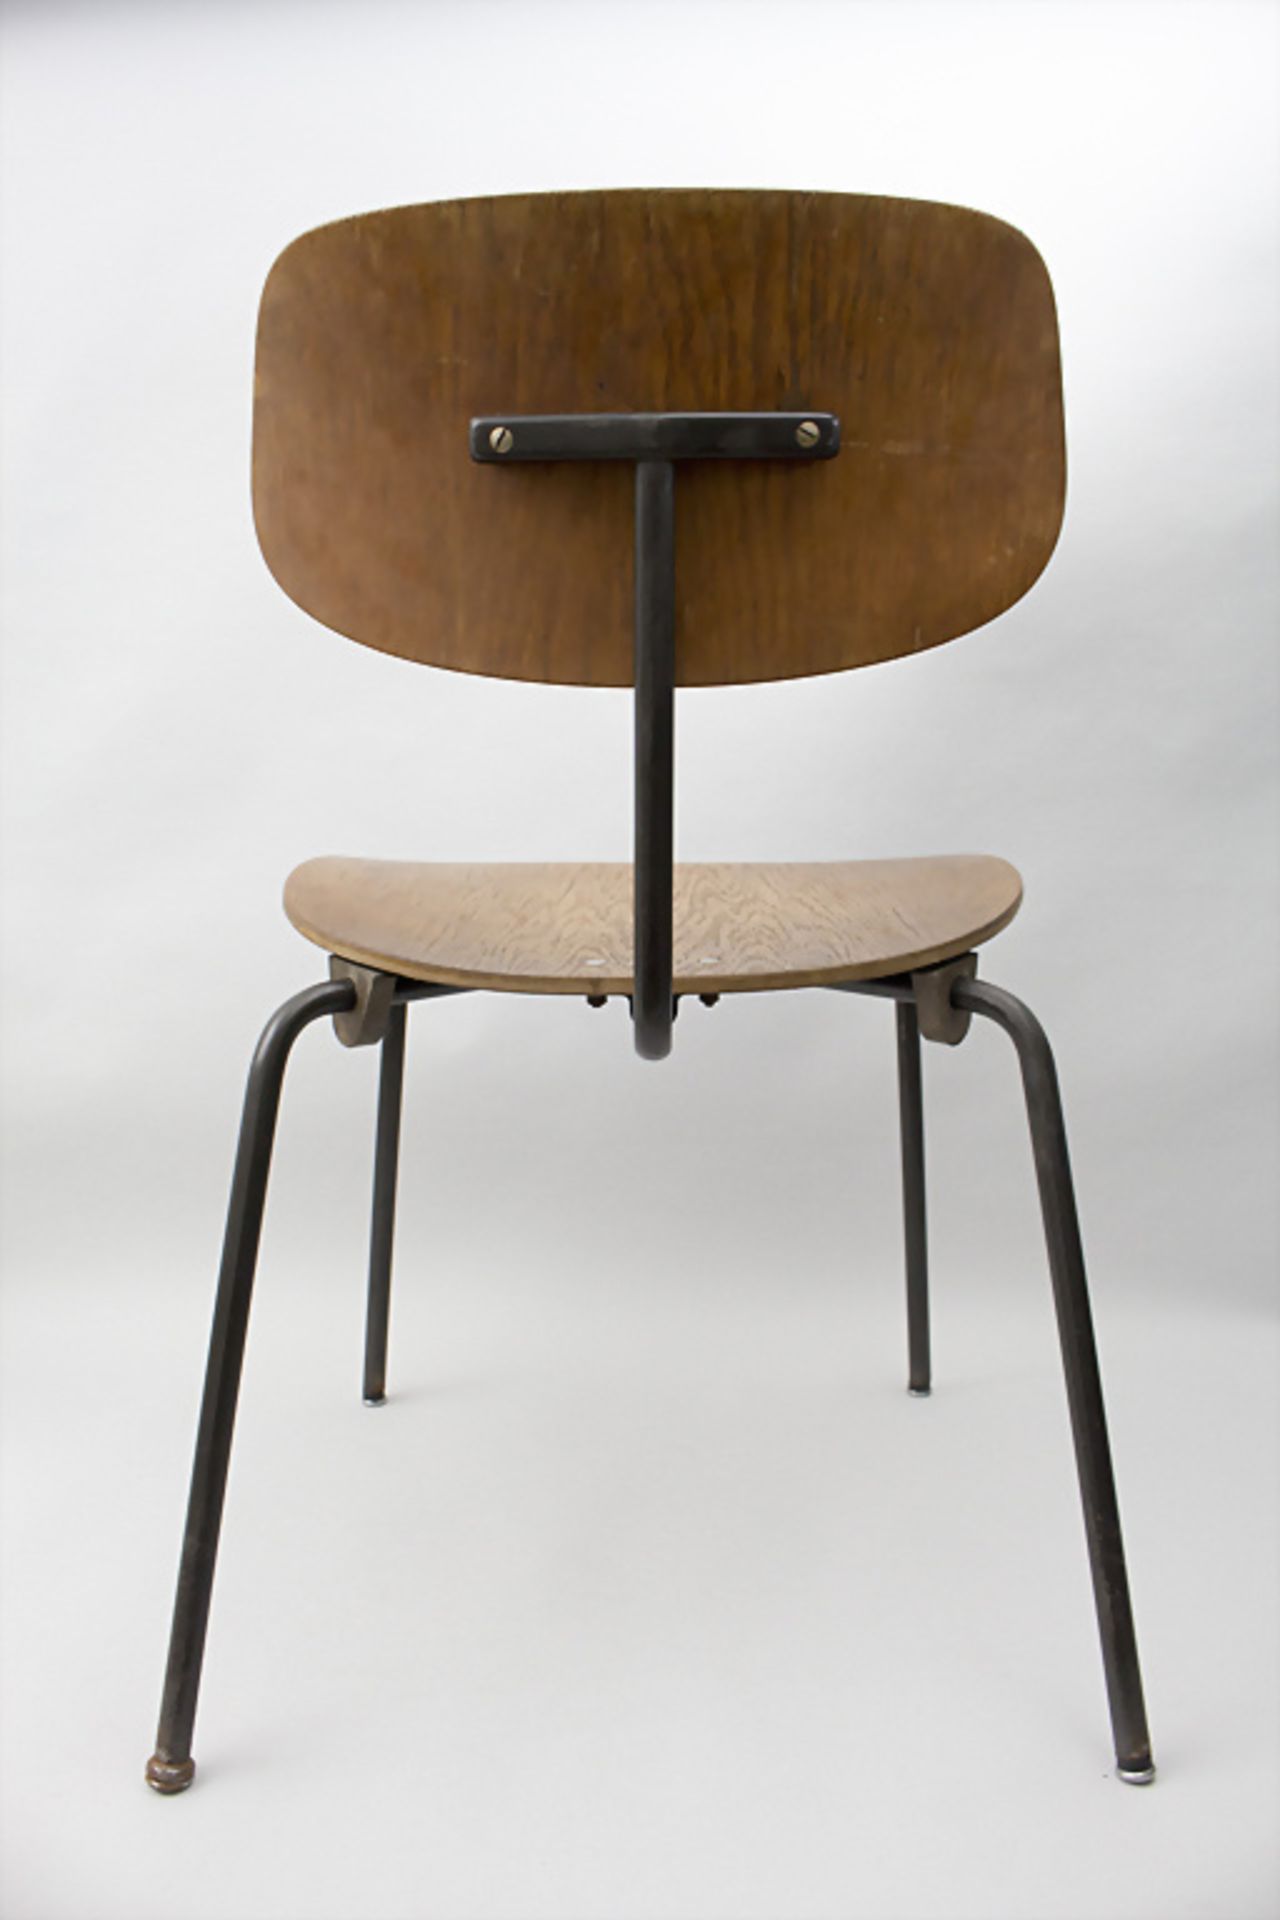 Stuhl / A chair, nach Entwurf Egon Eiermann, um 1950 - Bild 4 aus 5